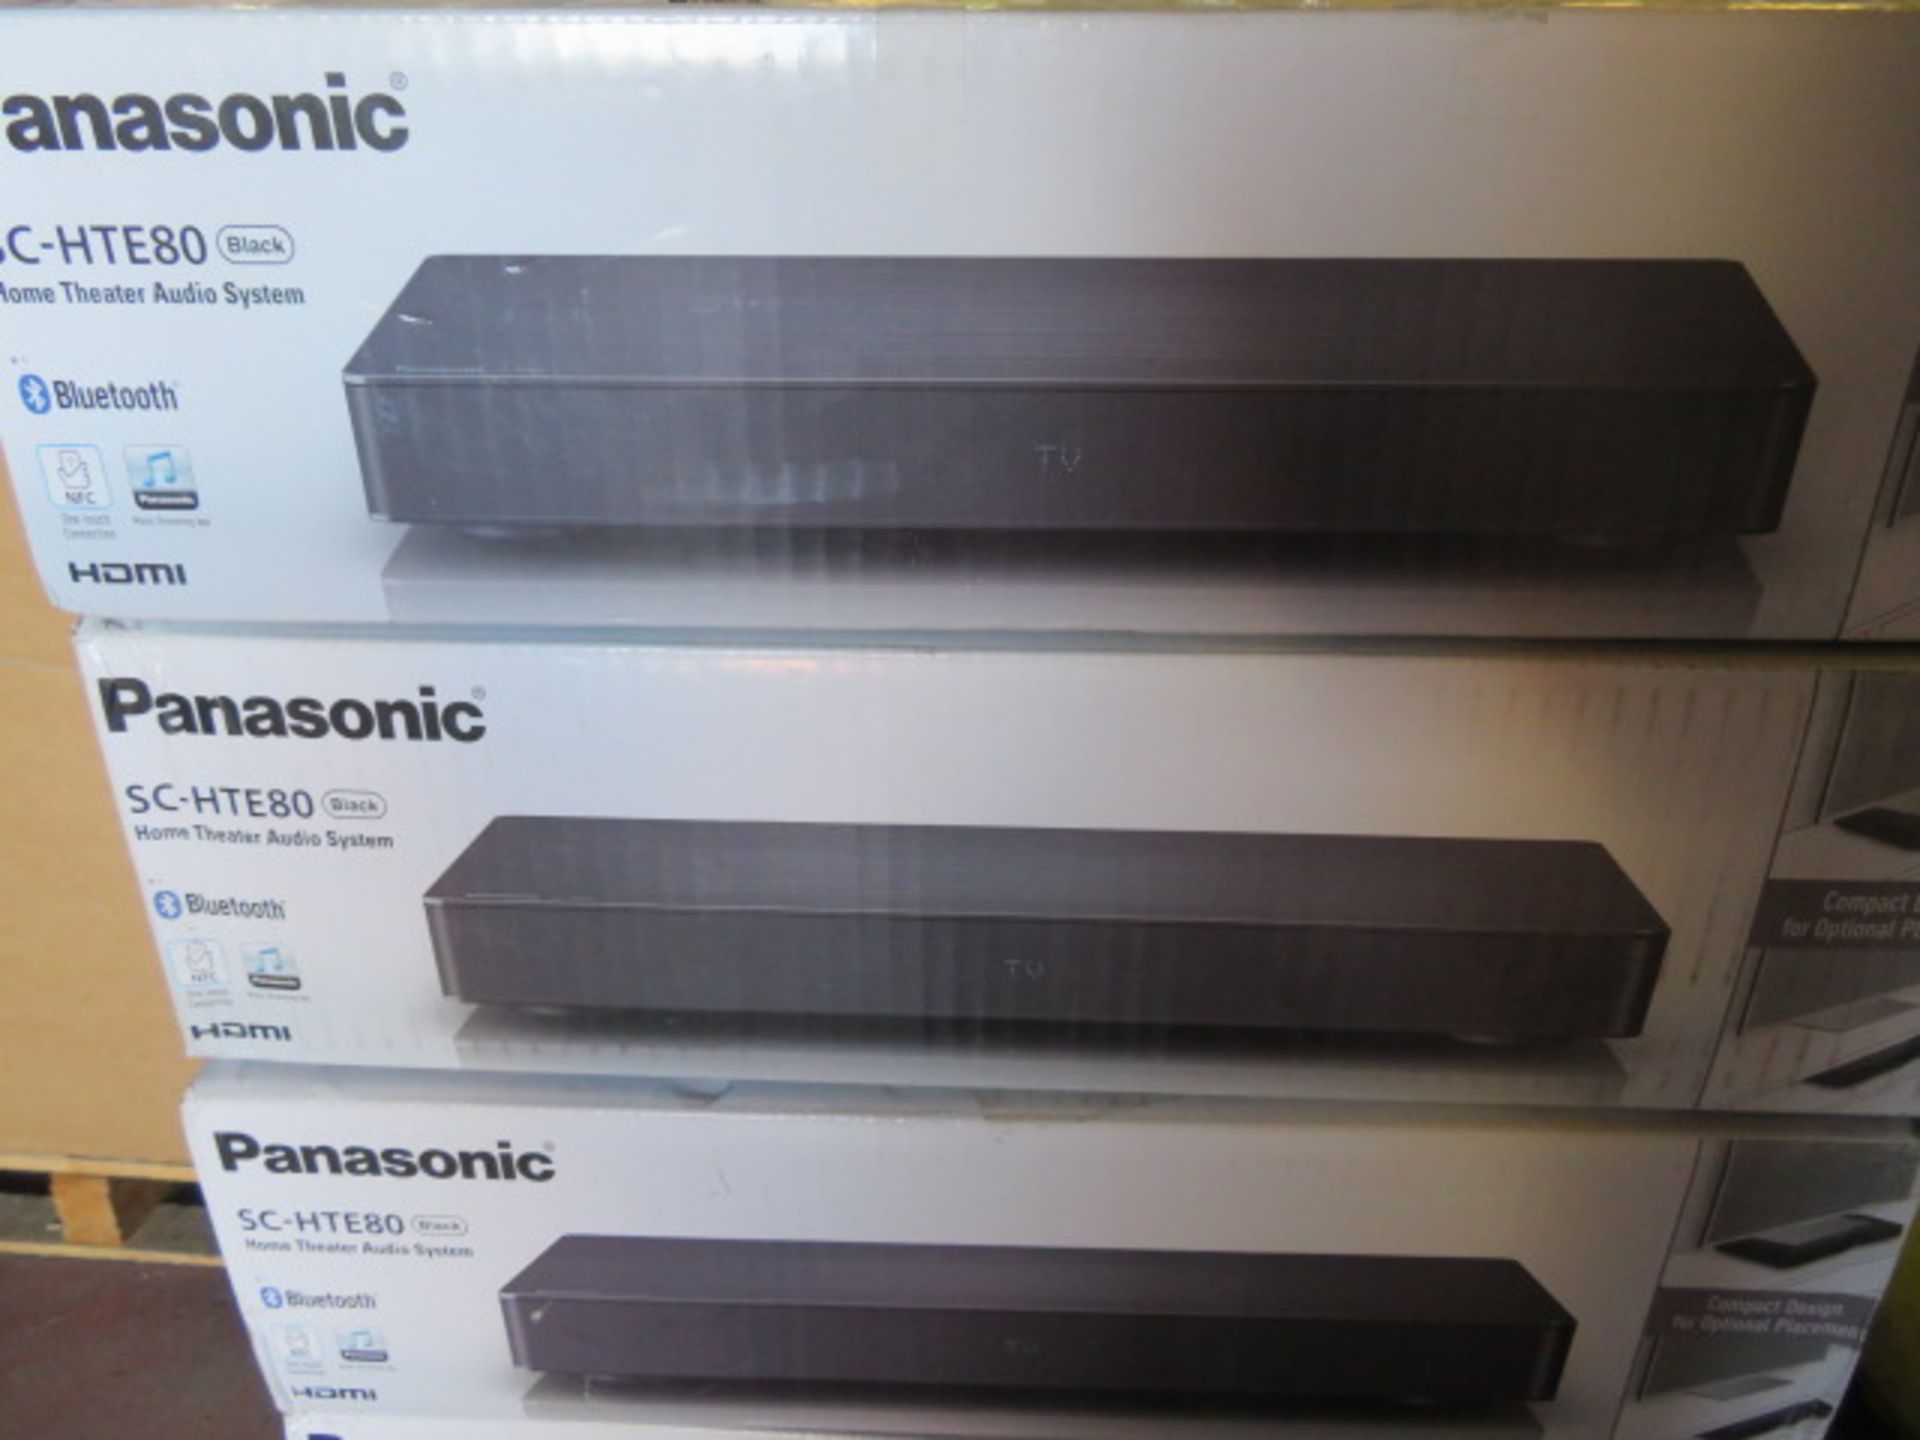 (29) 1 x Grade B - Panasonic SC-HTE80. Home Theater Audio System. Black with Bluetooth, HDMI, O...